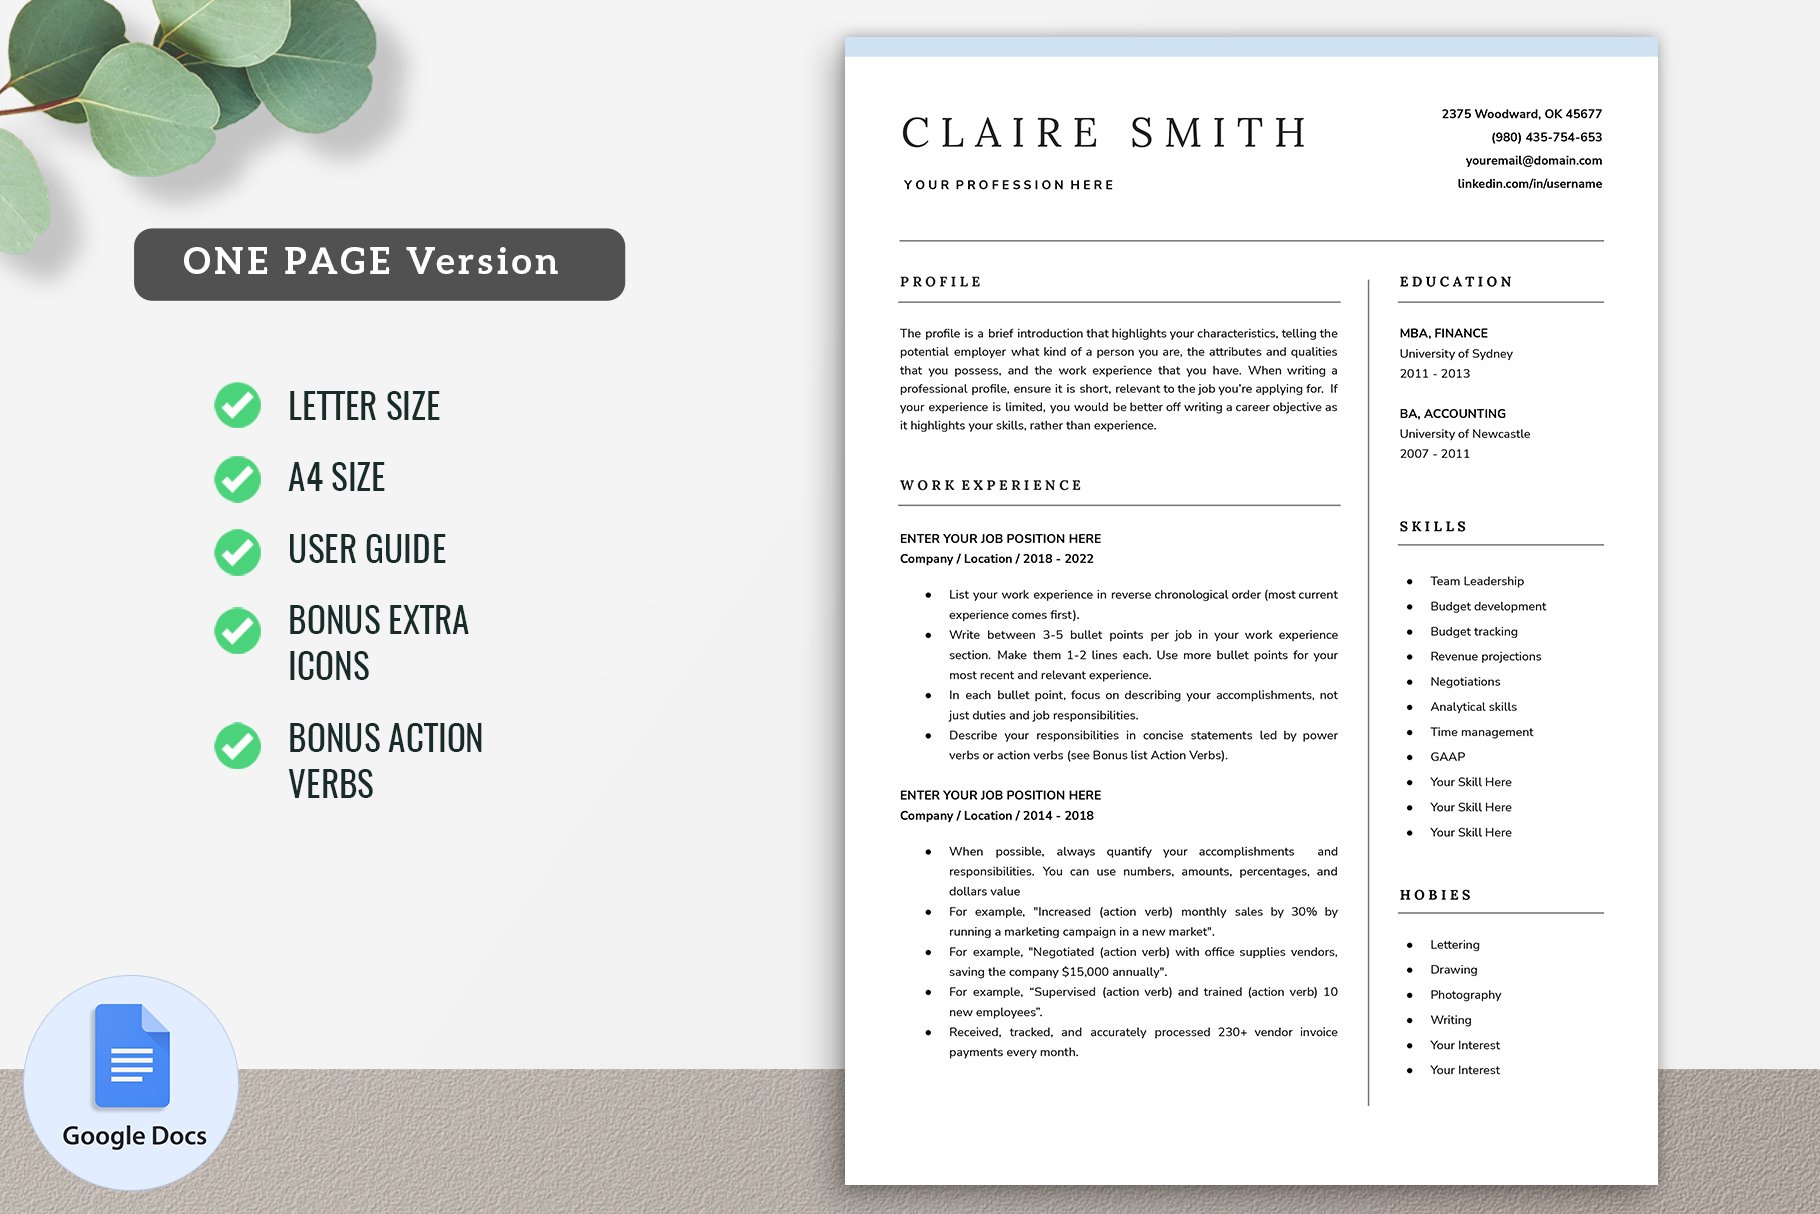 Google Docs Resume CV Template 04 preview image.